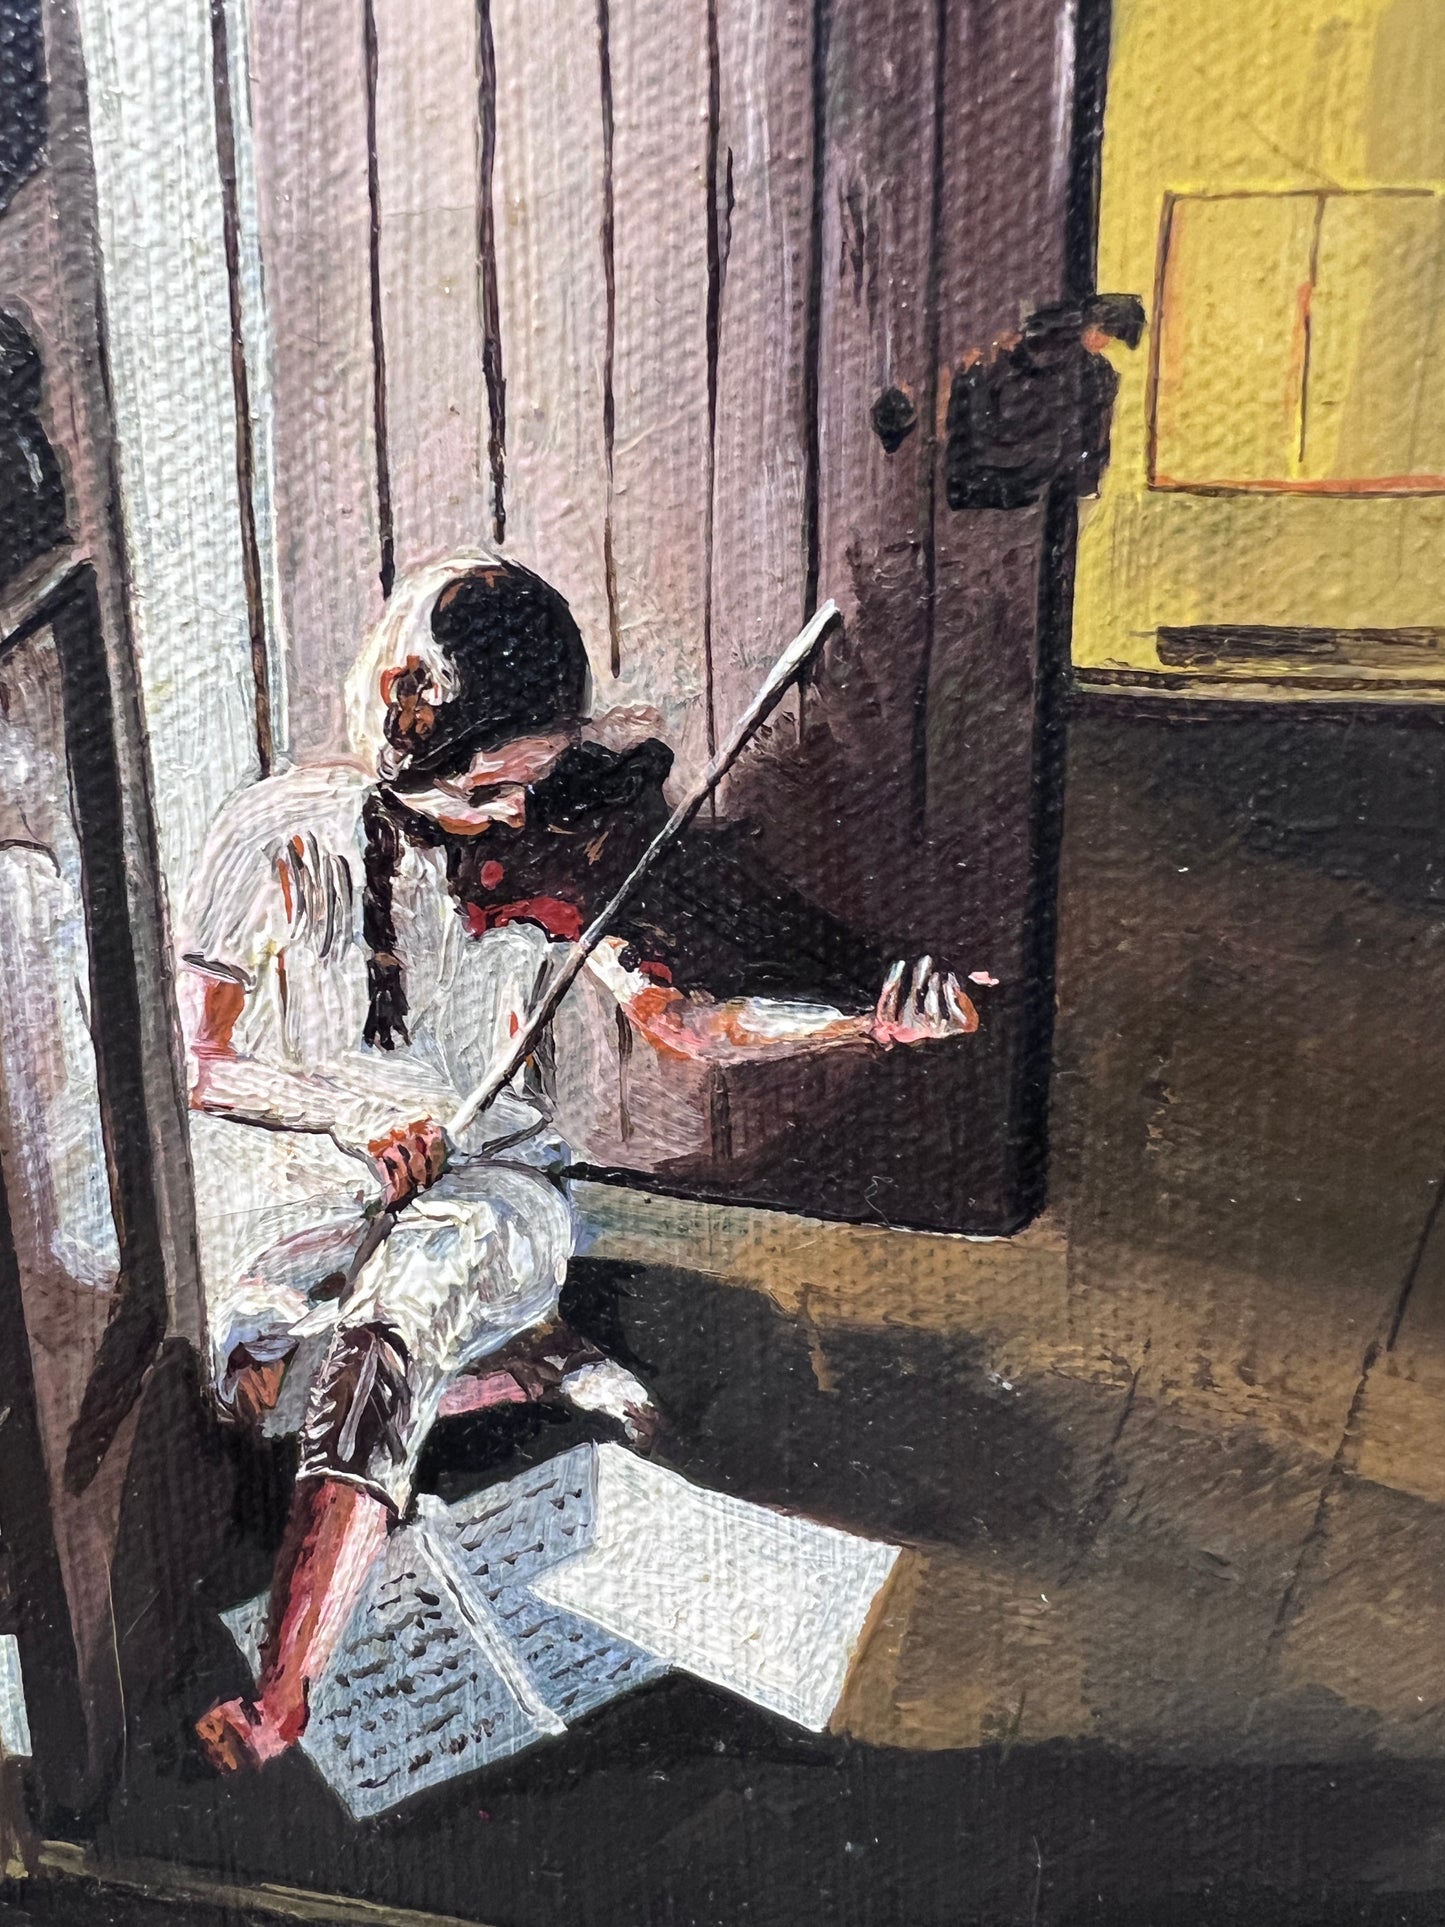 C.Klain Vintage Oil painting on canvas, Girl playing violin, Framed